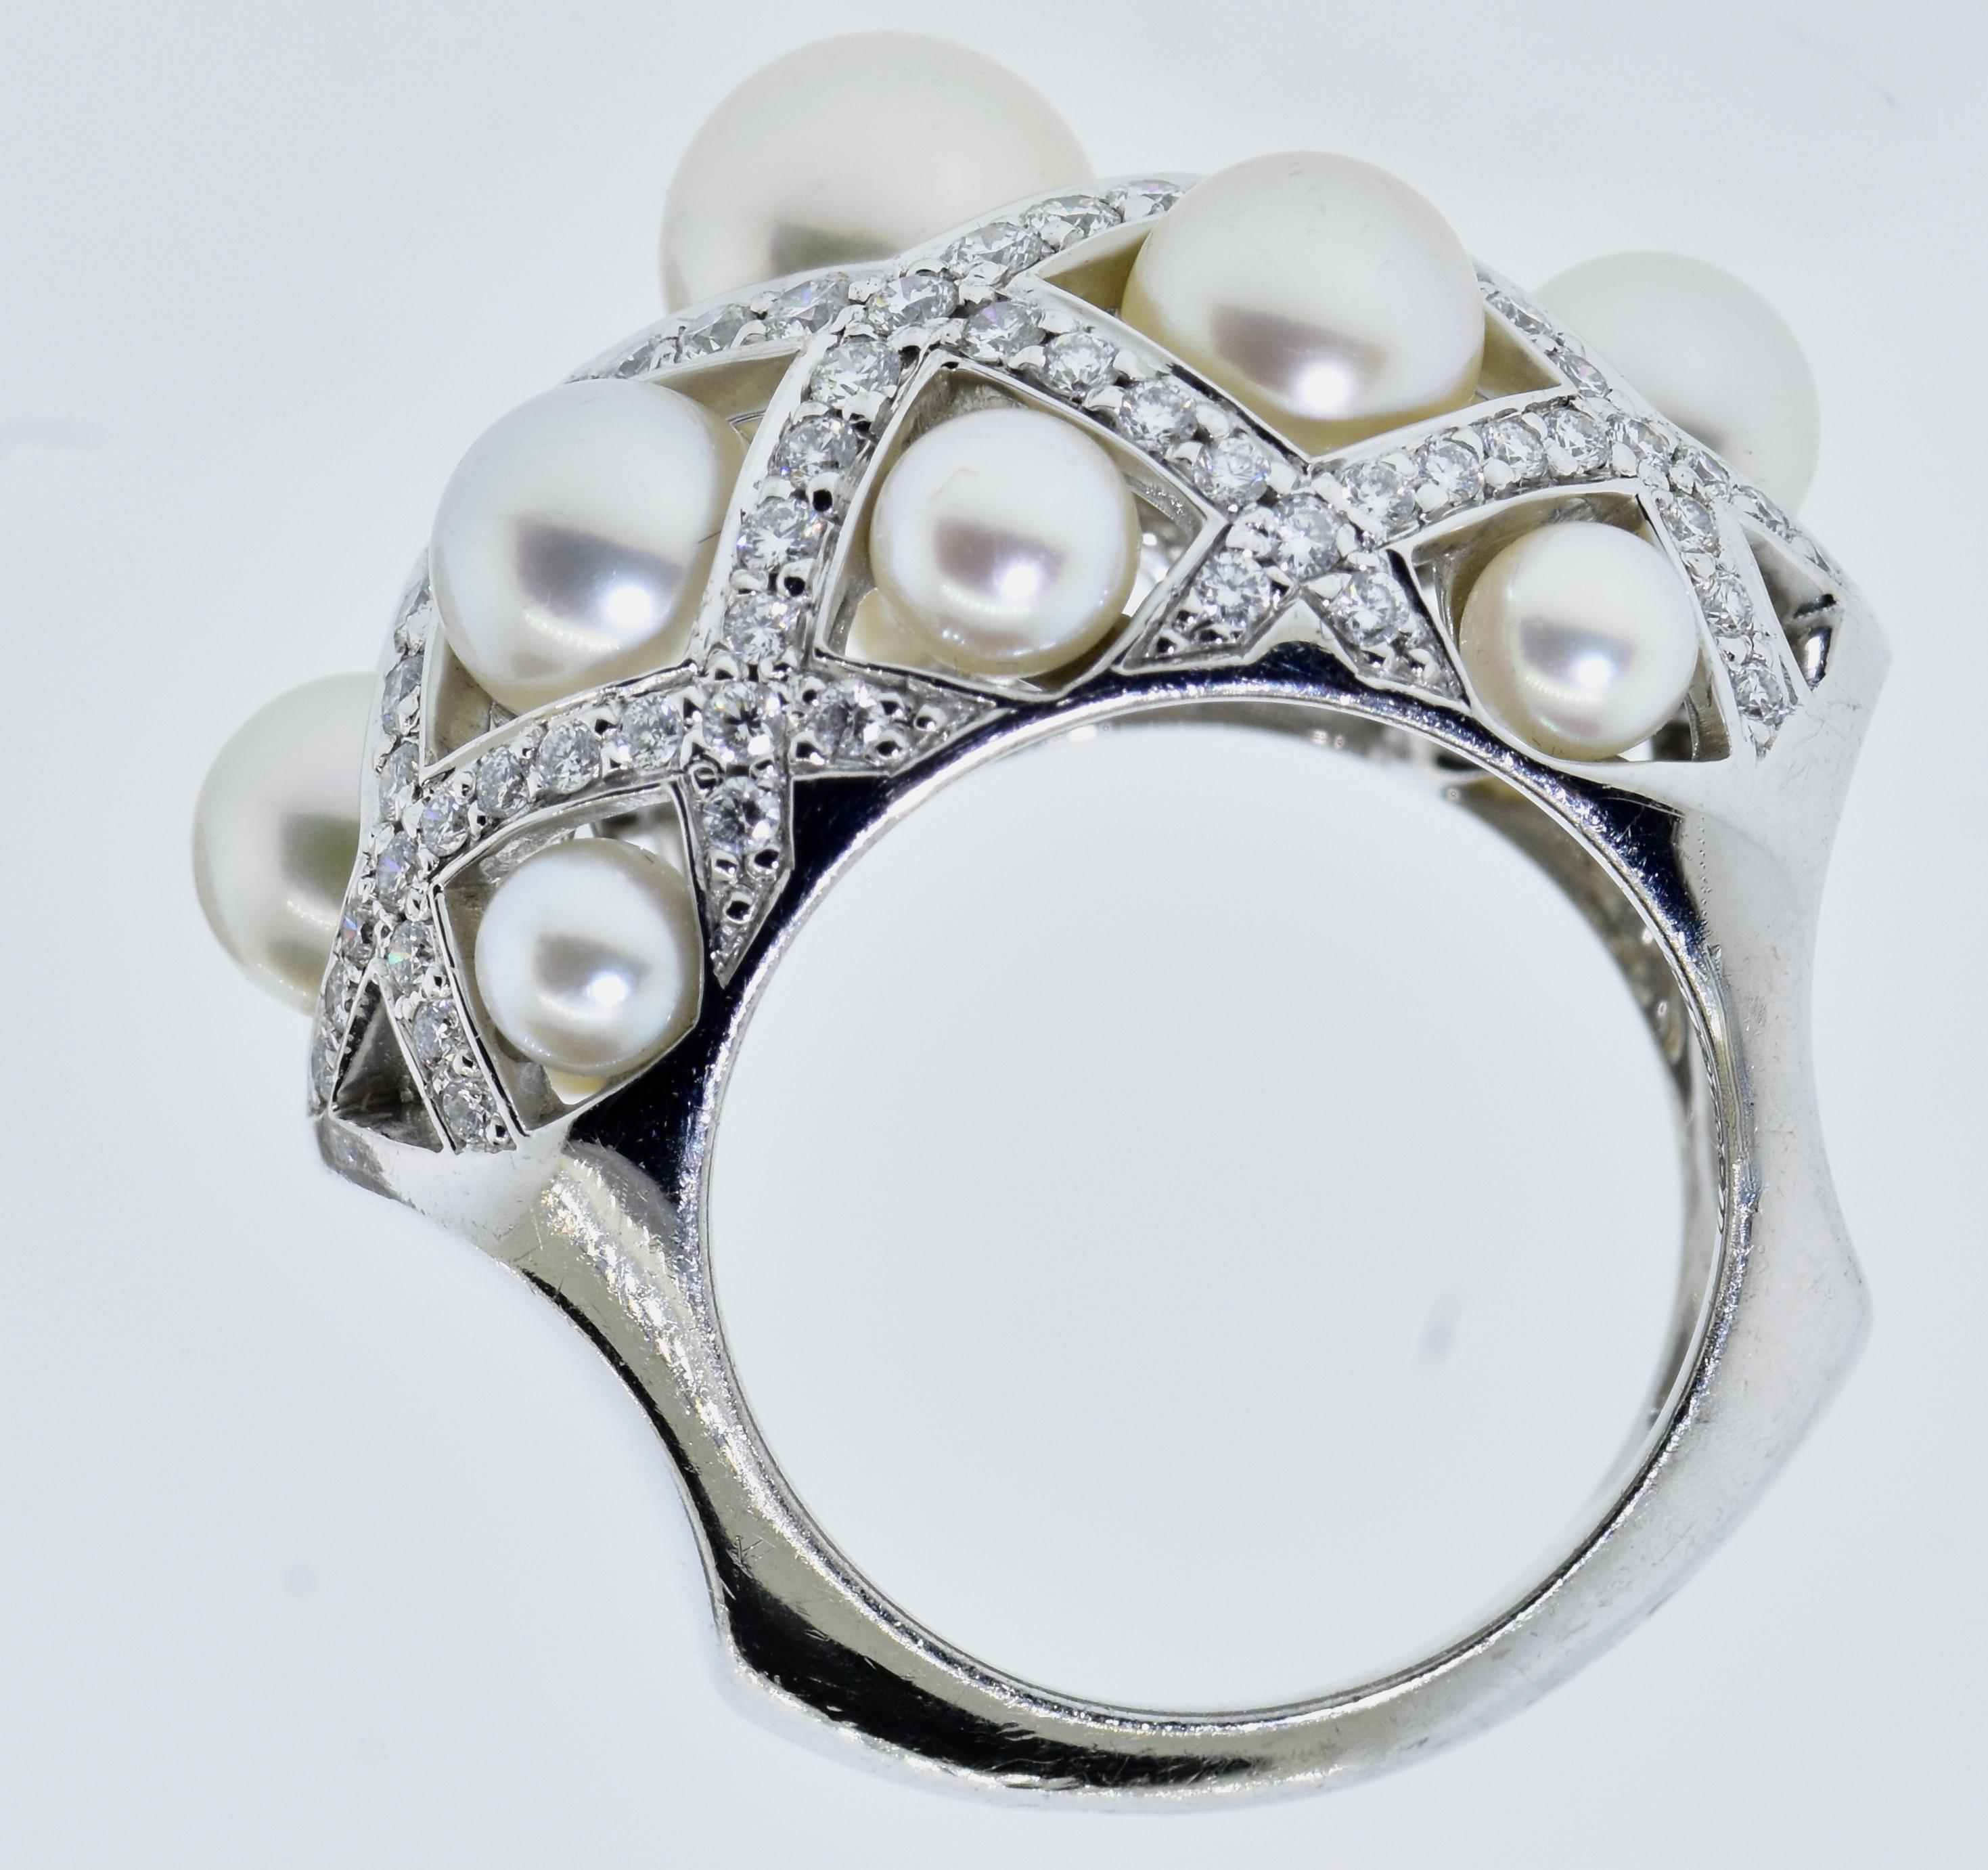 Chanel Matelasse Diamant & Perle 18K Breites Armreif-Armband & passender Ring C 2009 9